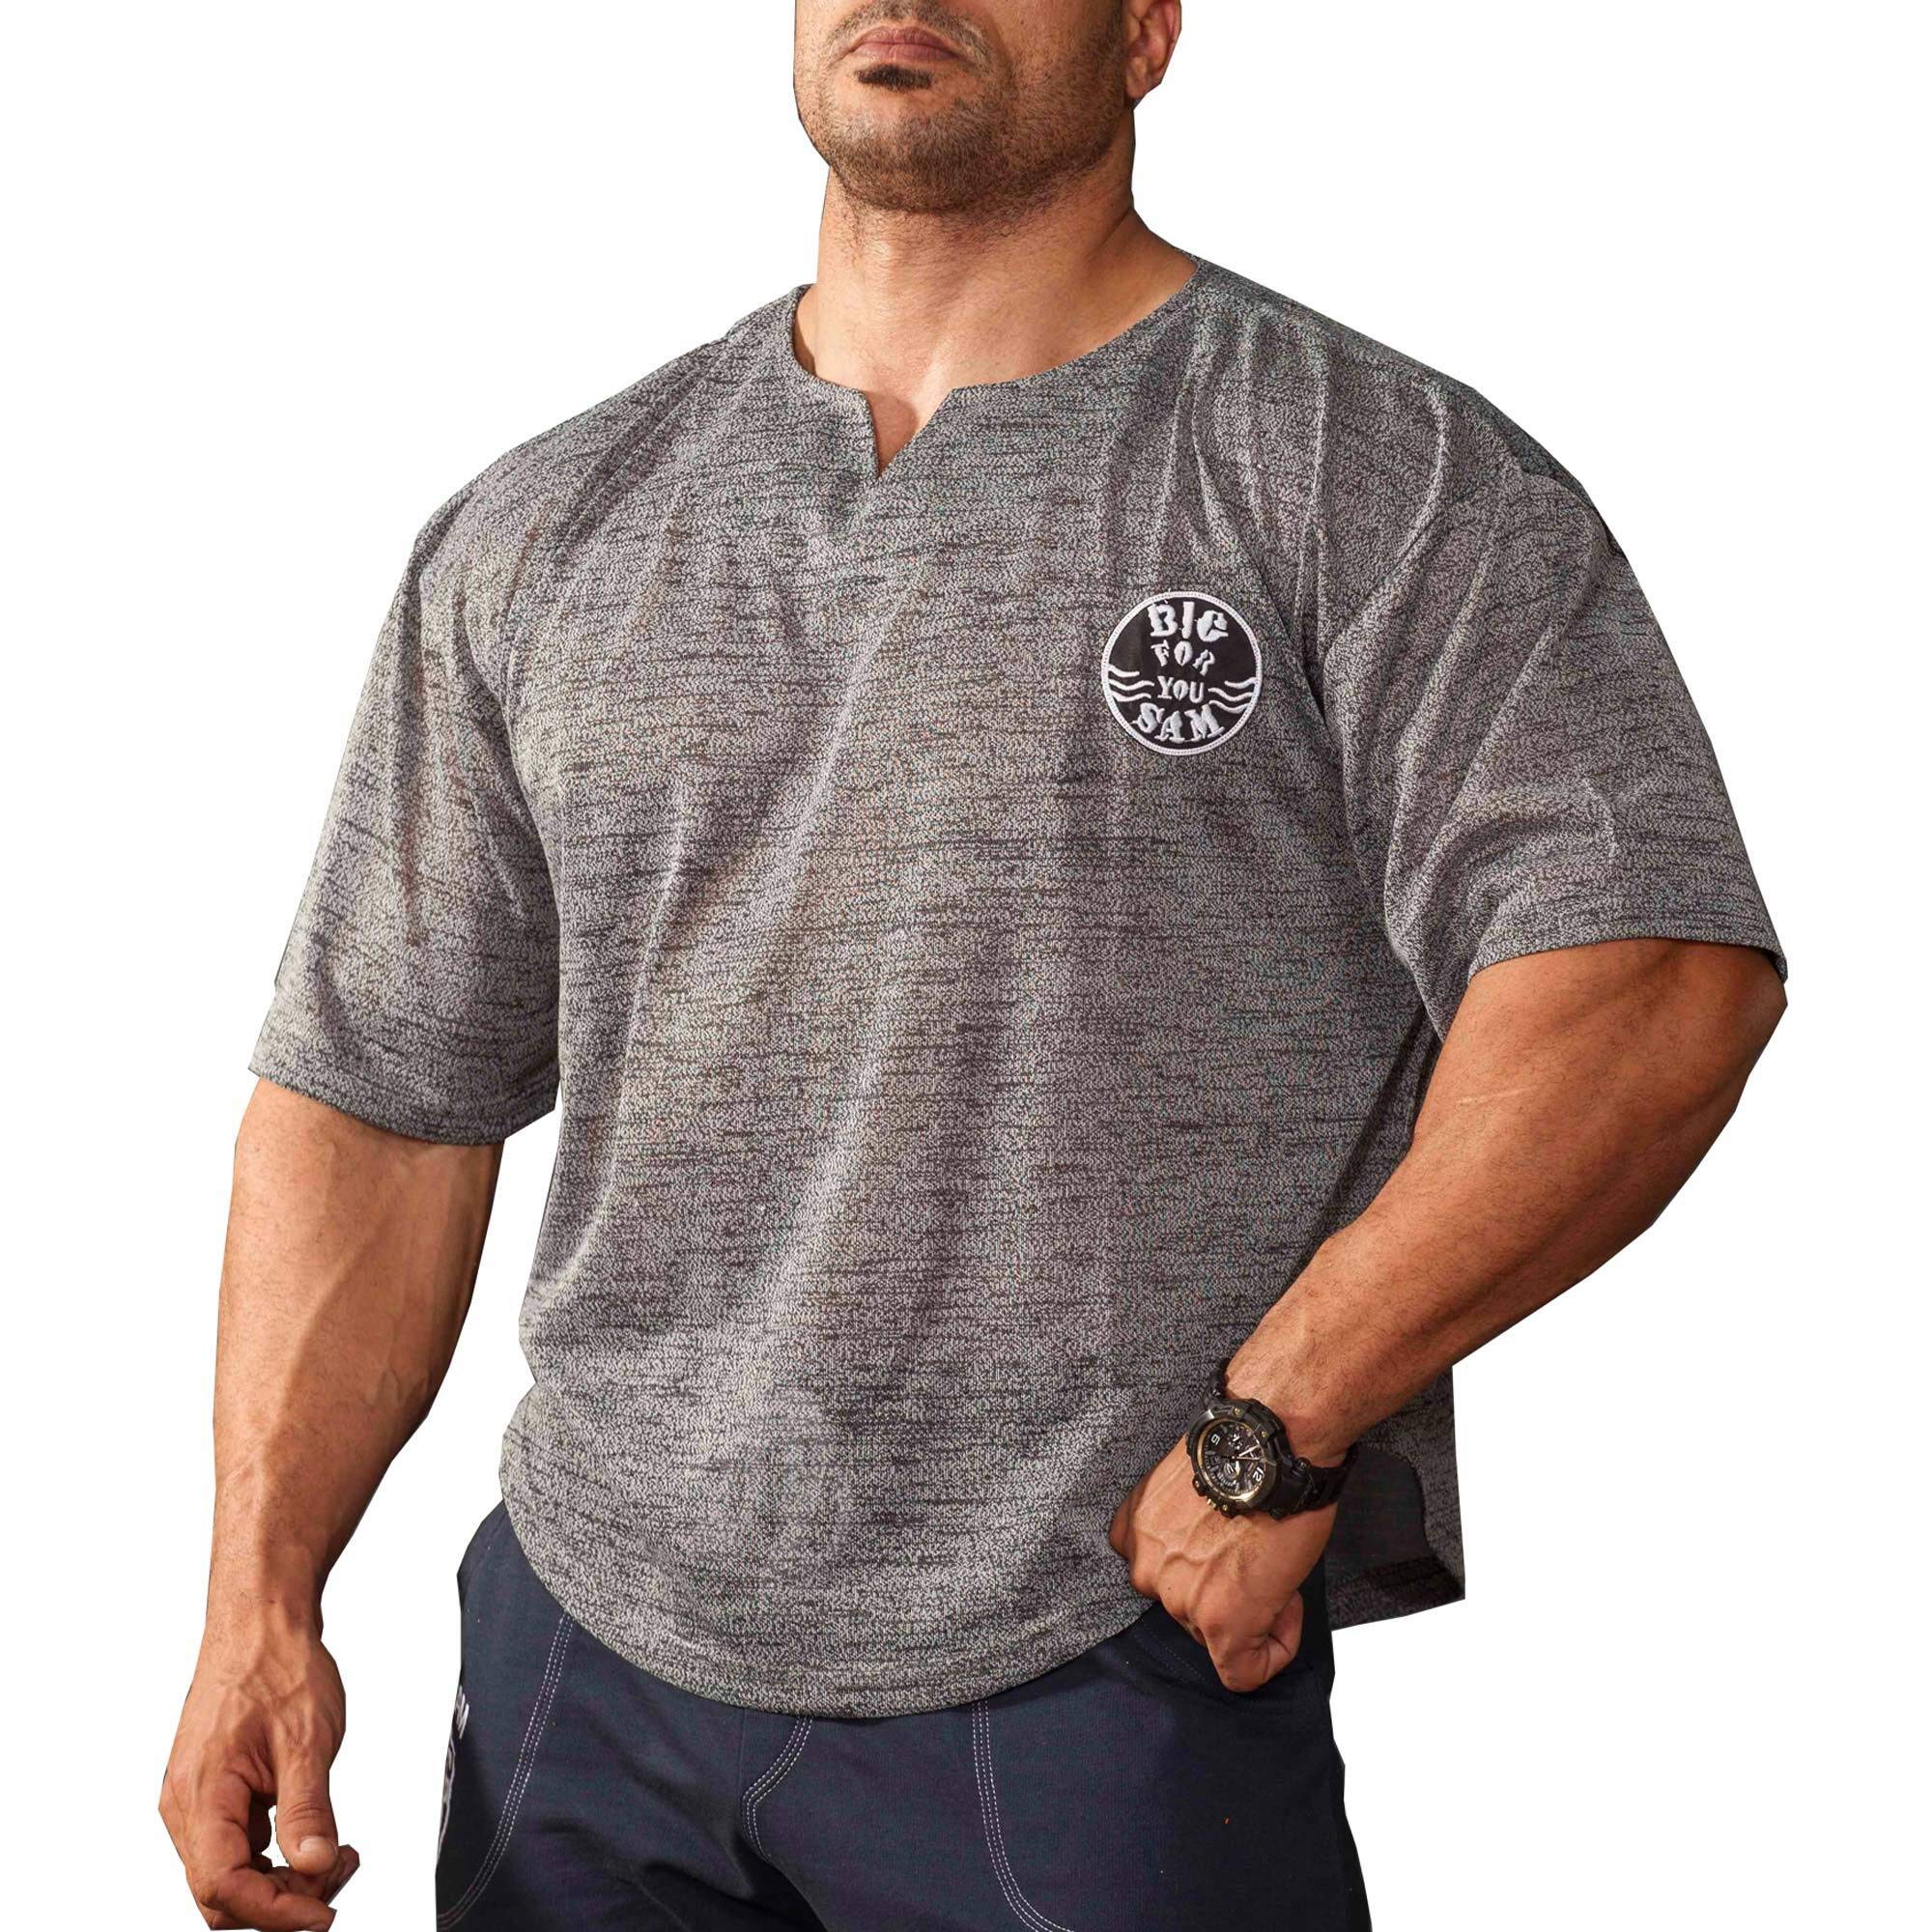 BIG SM EXTREME SPORTSWEAR Herren Ragtop Rag Top Sweater T-Shirt Bodybuilding 3142 grau M